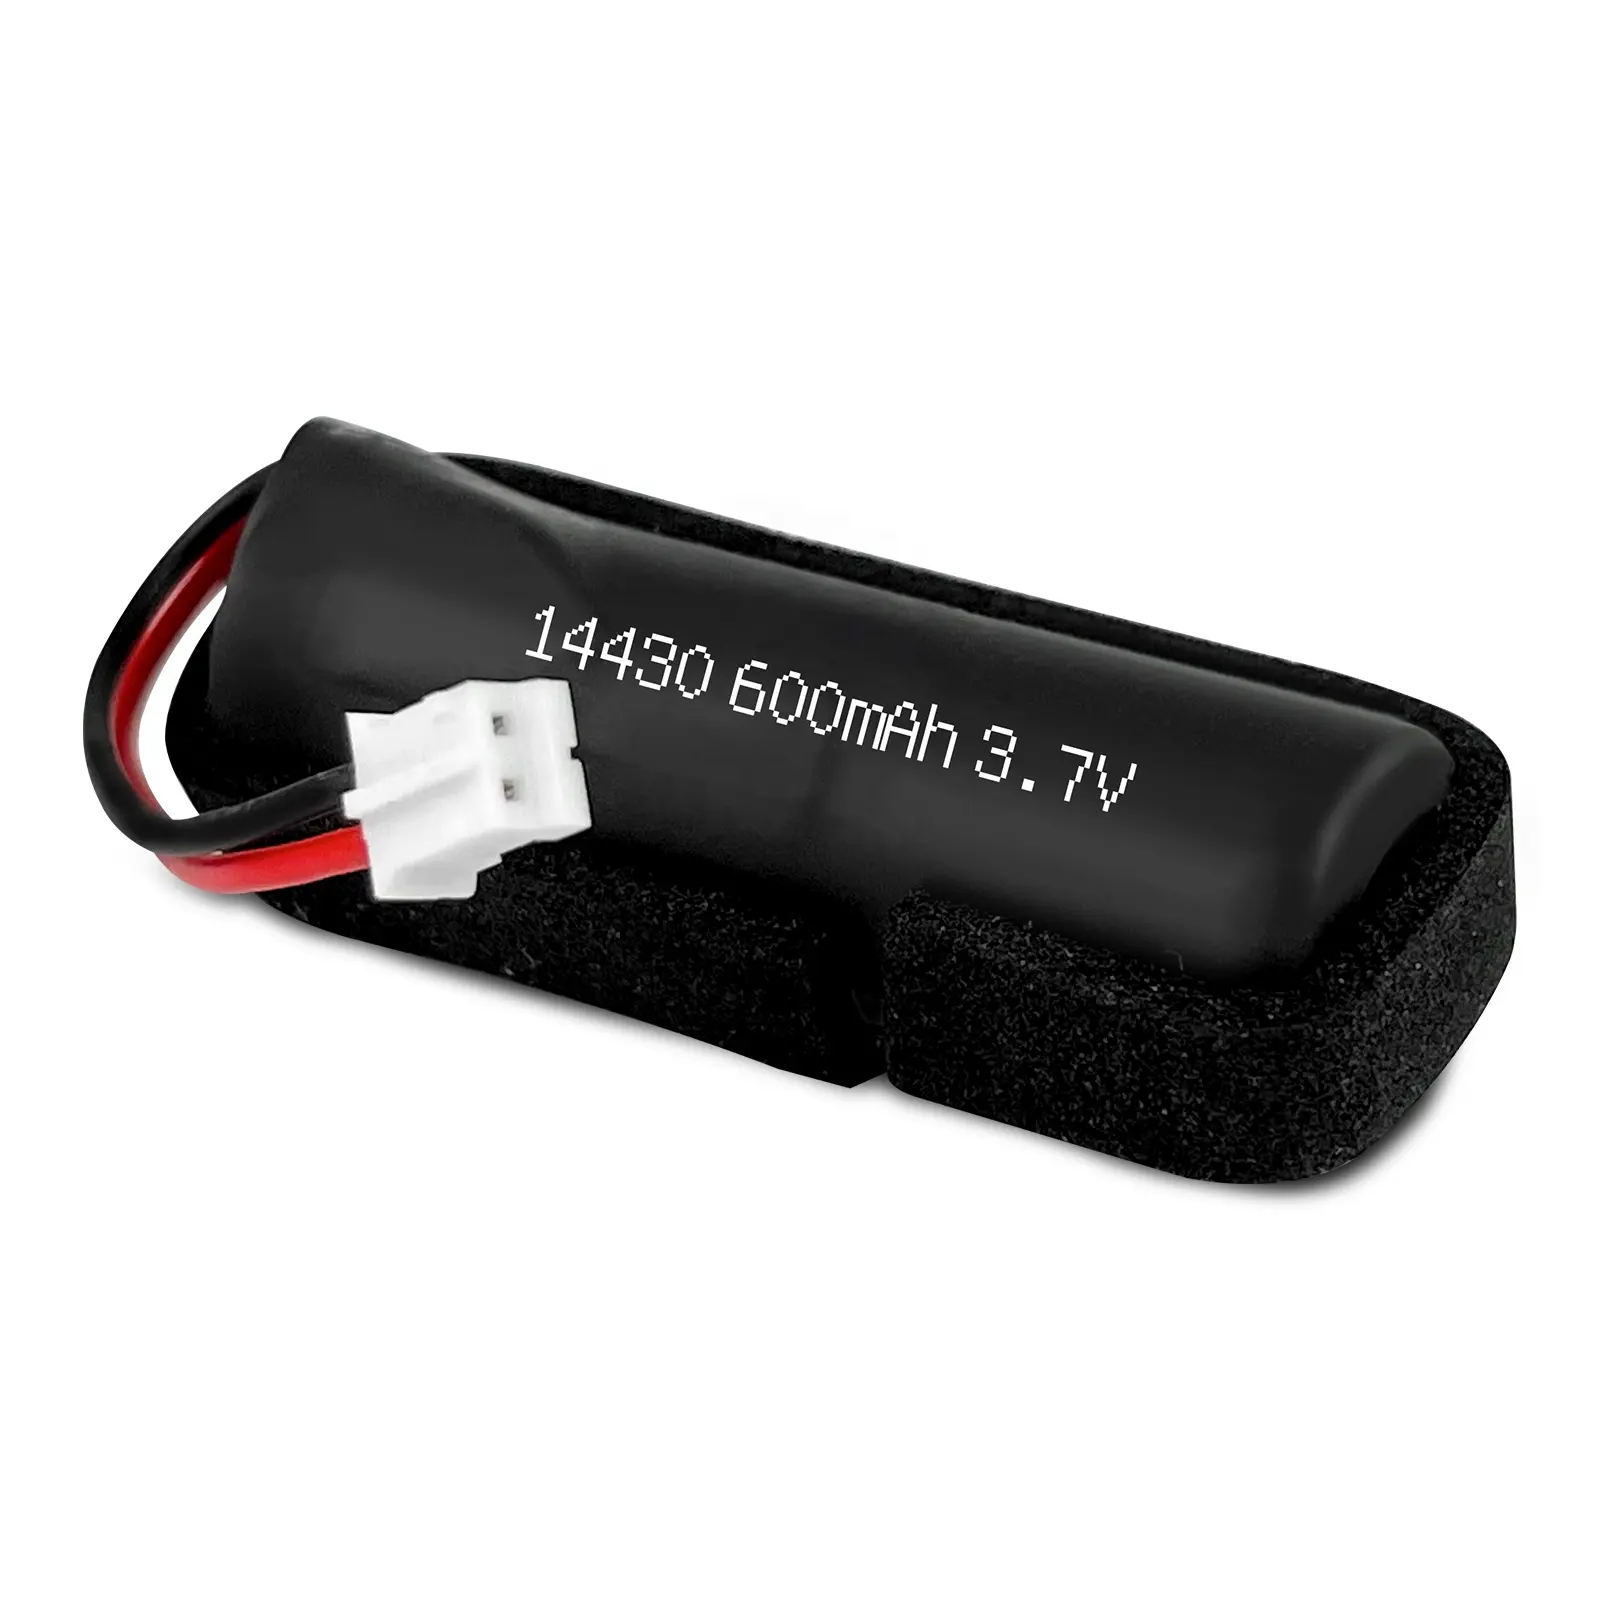 JINTION 14430 600 mah 3,7 v lithiumbatterien 3,7 v li-ion batterie für ps3 move